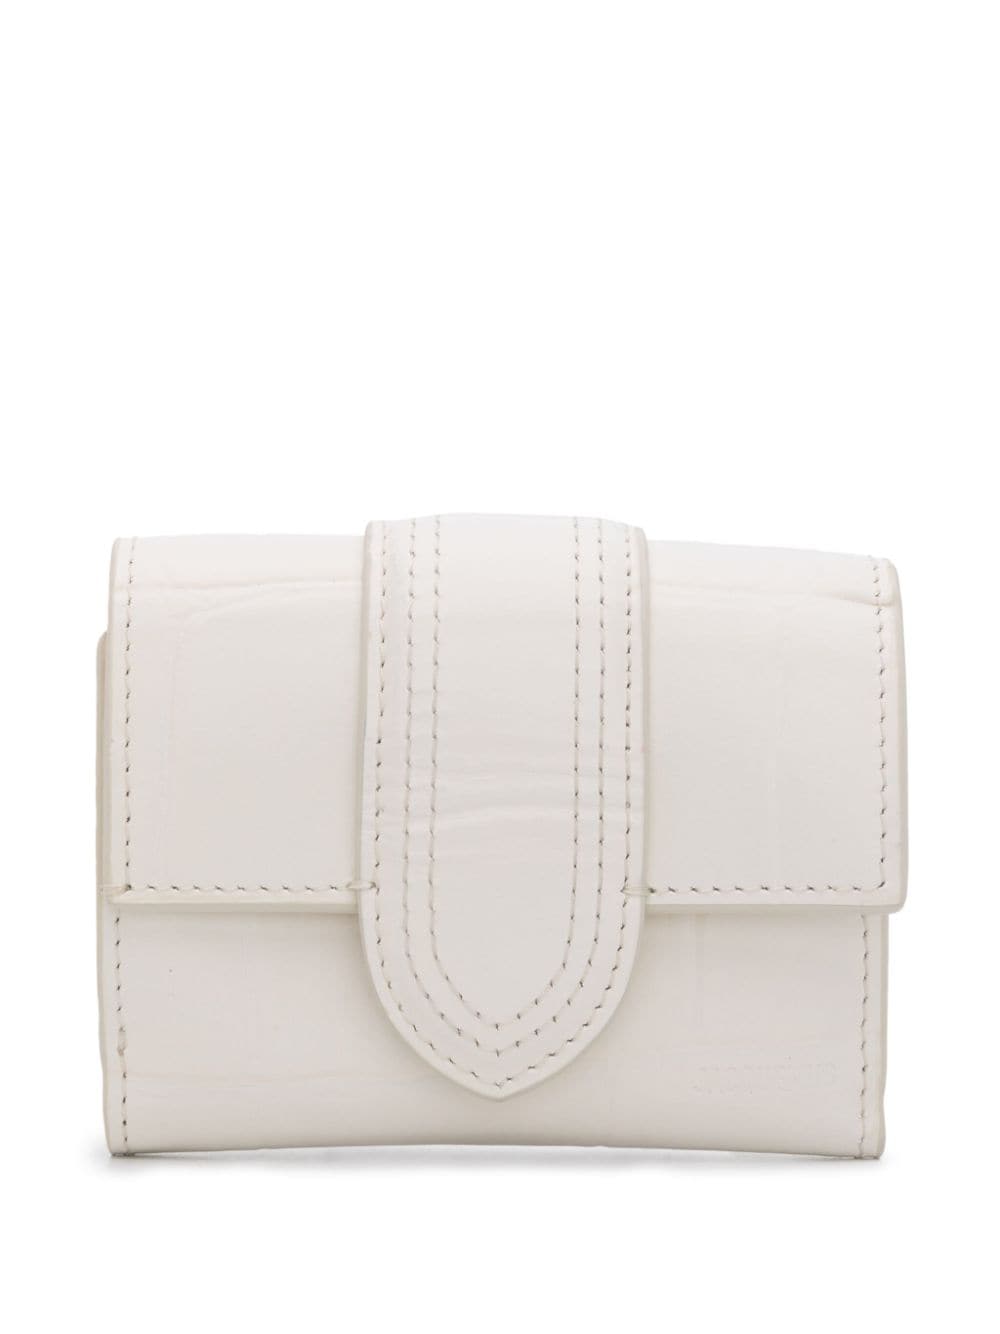 Jacquemus Le Compact Bambino leather wallet - White von Jacquemus